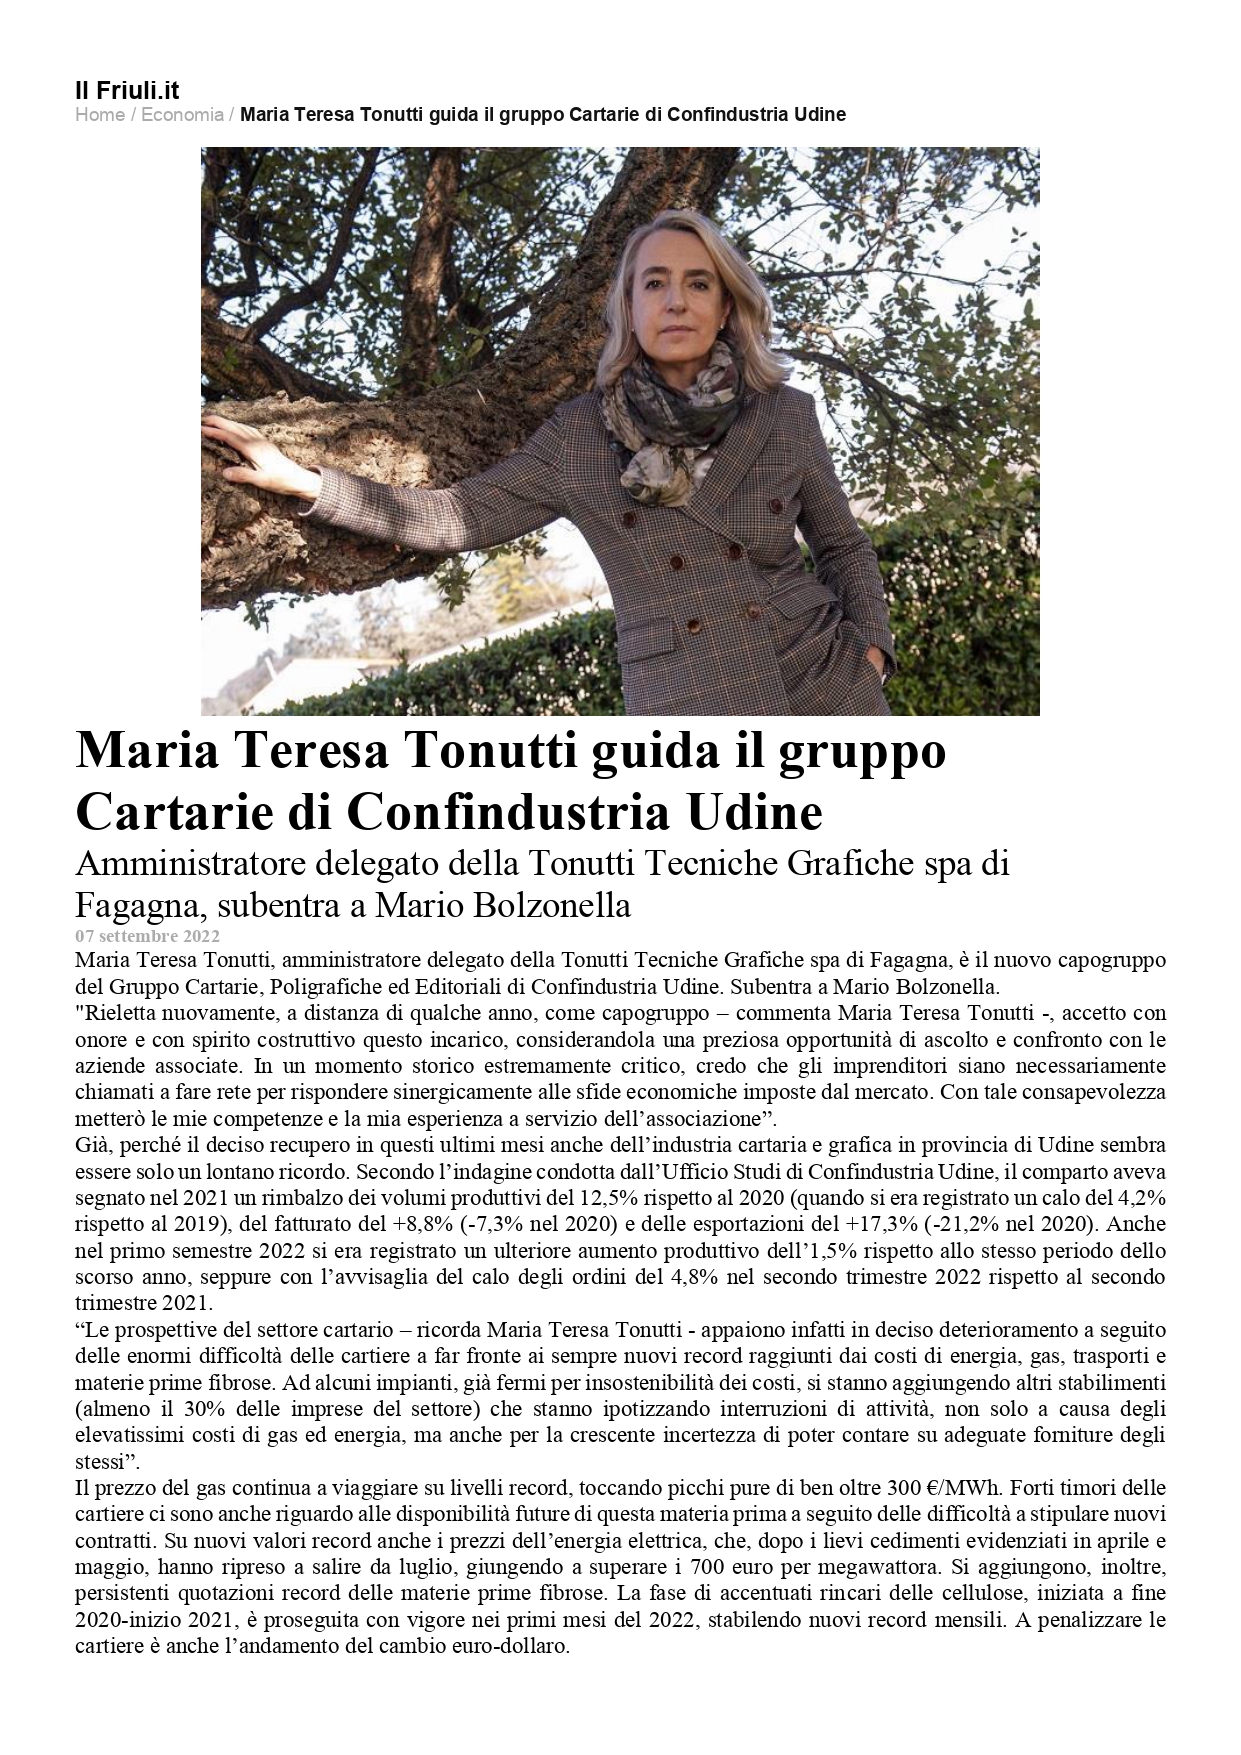 Maria Teresa Tonutti Capogruppo Cartarie Confindustria Udine